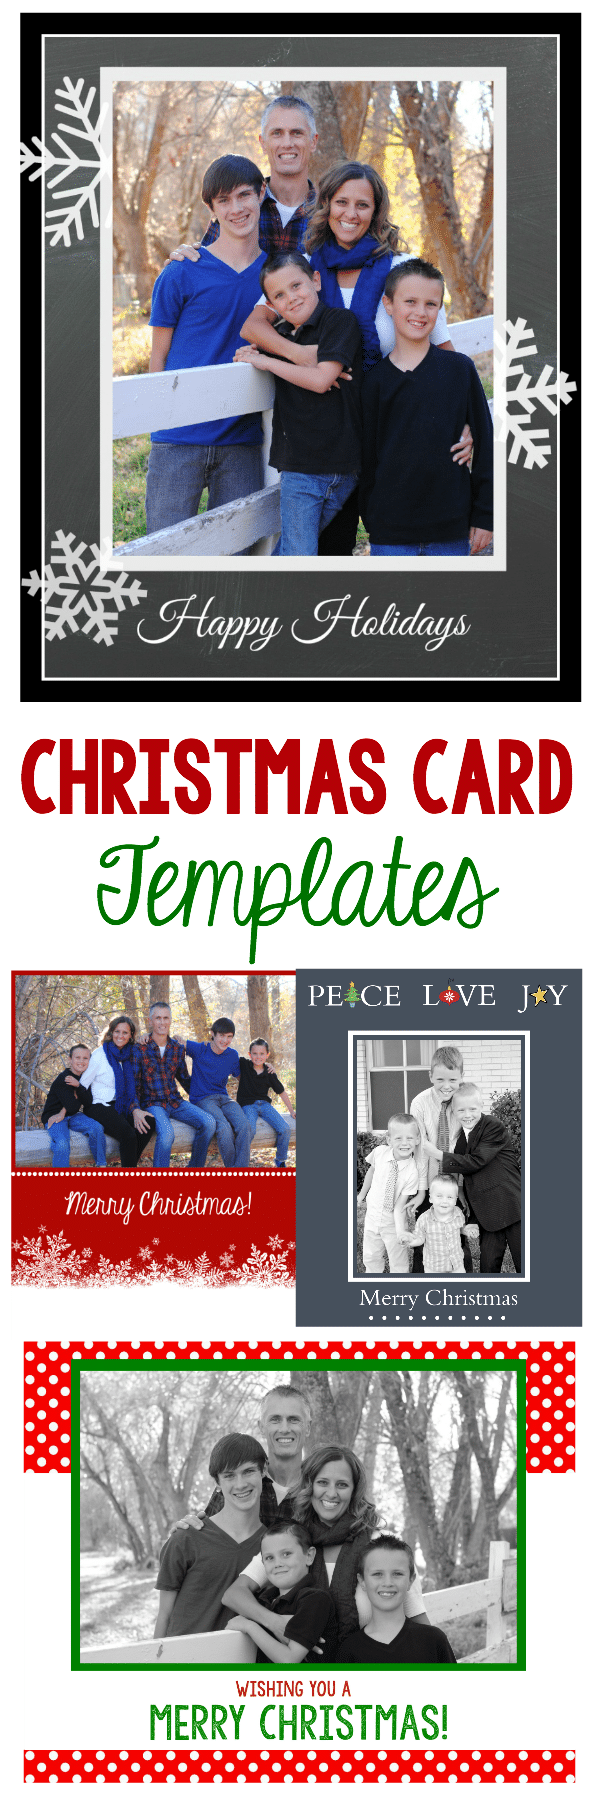 50-free-holiday-photo-card-templates-moritz-fine-designs